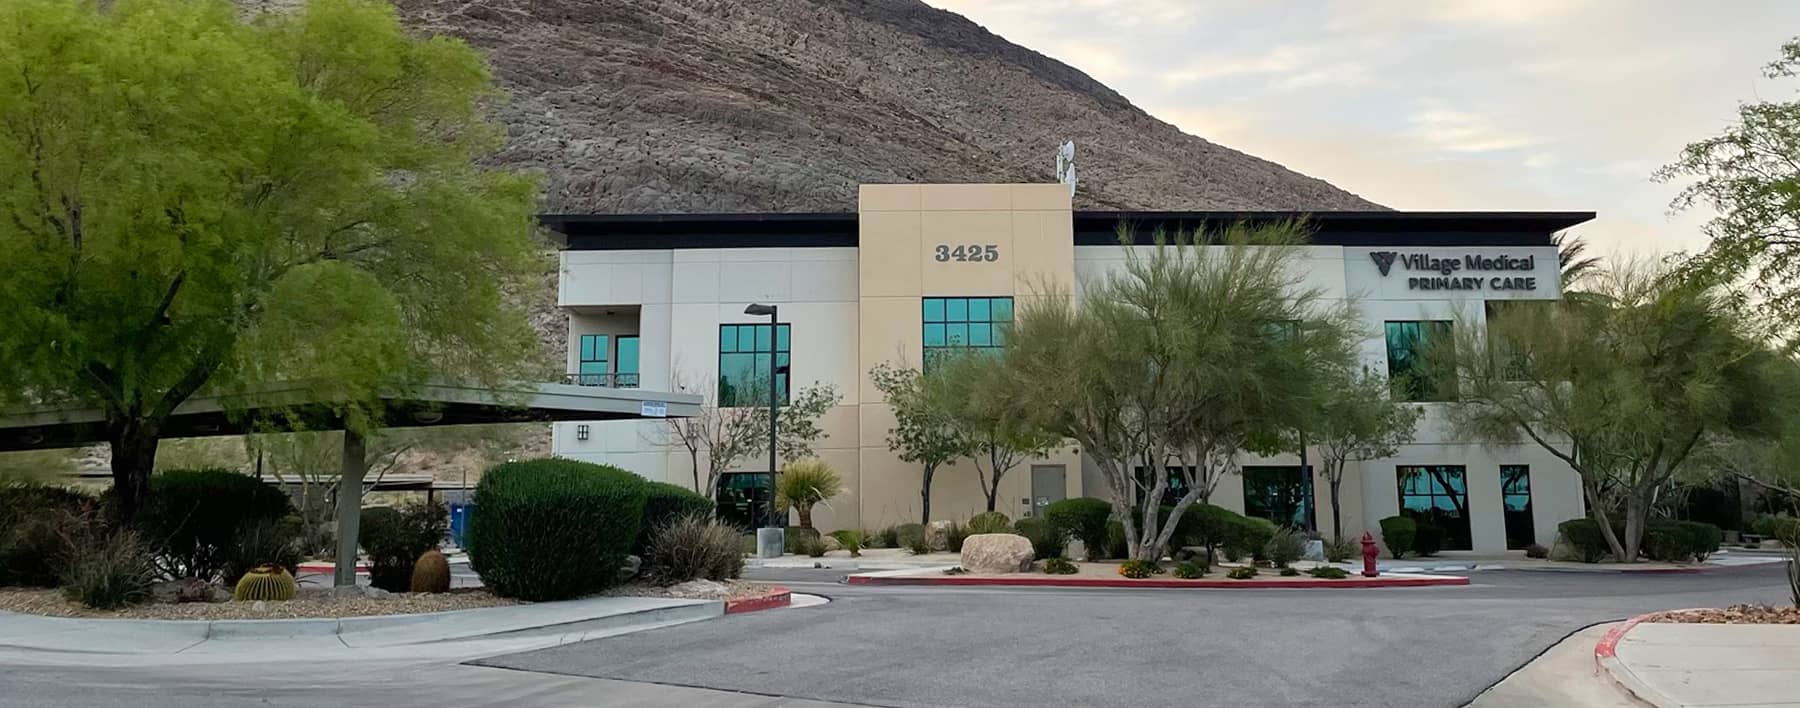 New Village Medical Primary Care in Las Vegas, NV | GLR, Inc.